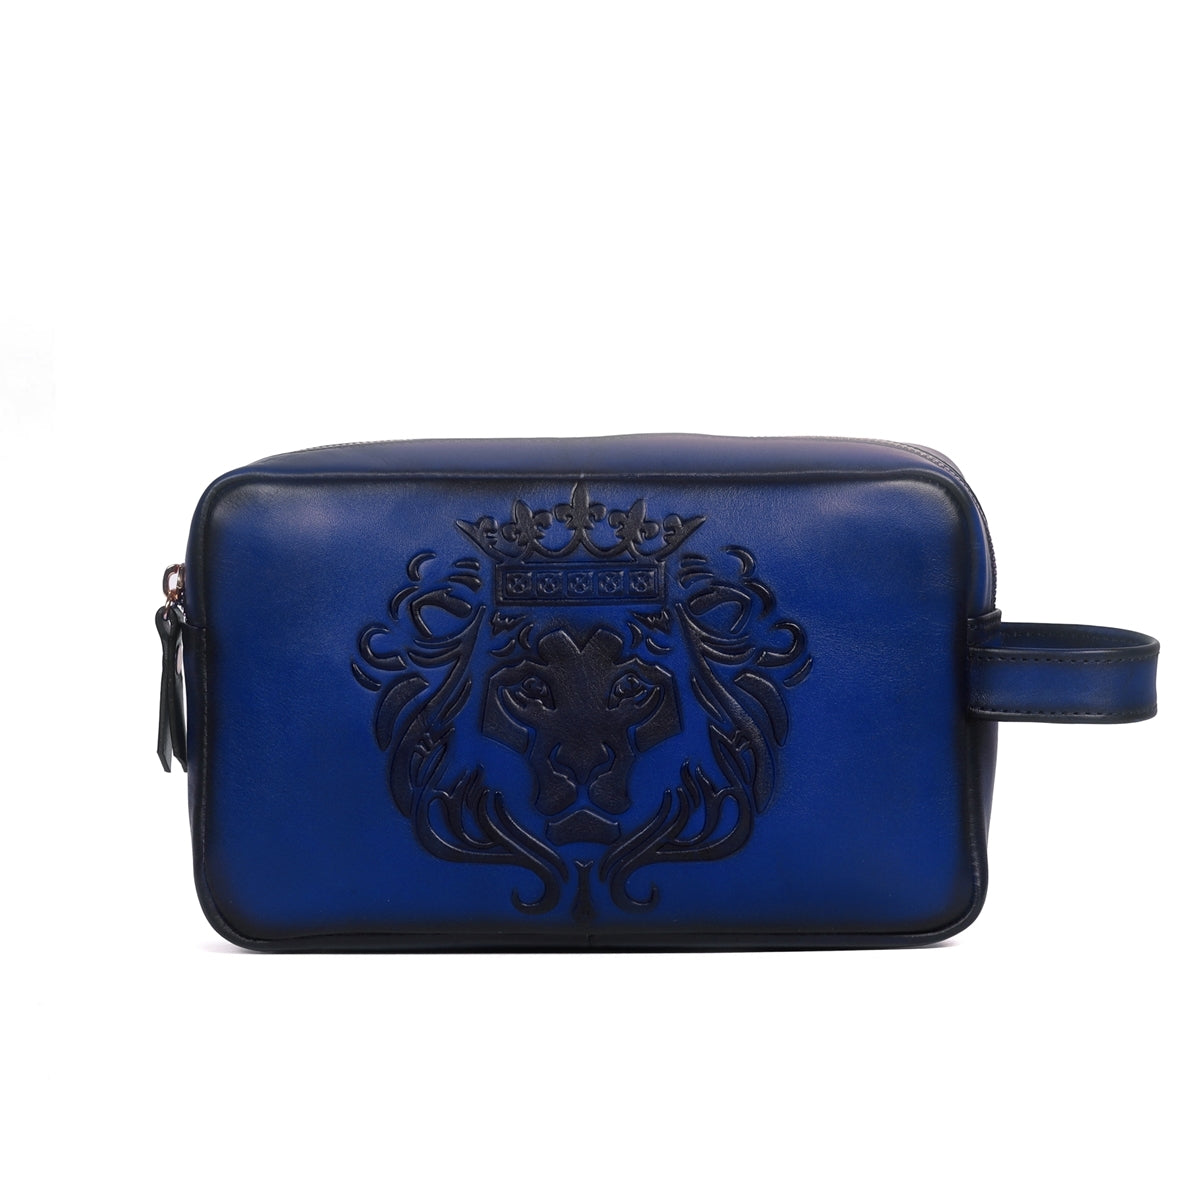 Unisex Blue Genuine Leather Embossed Lion Slim Kit Bag for Travel by Brune & Bareskin